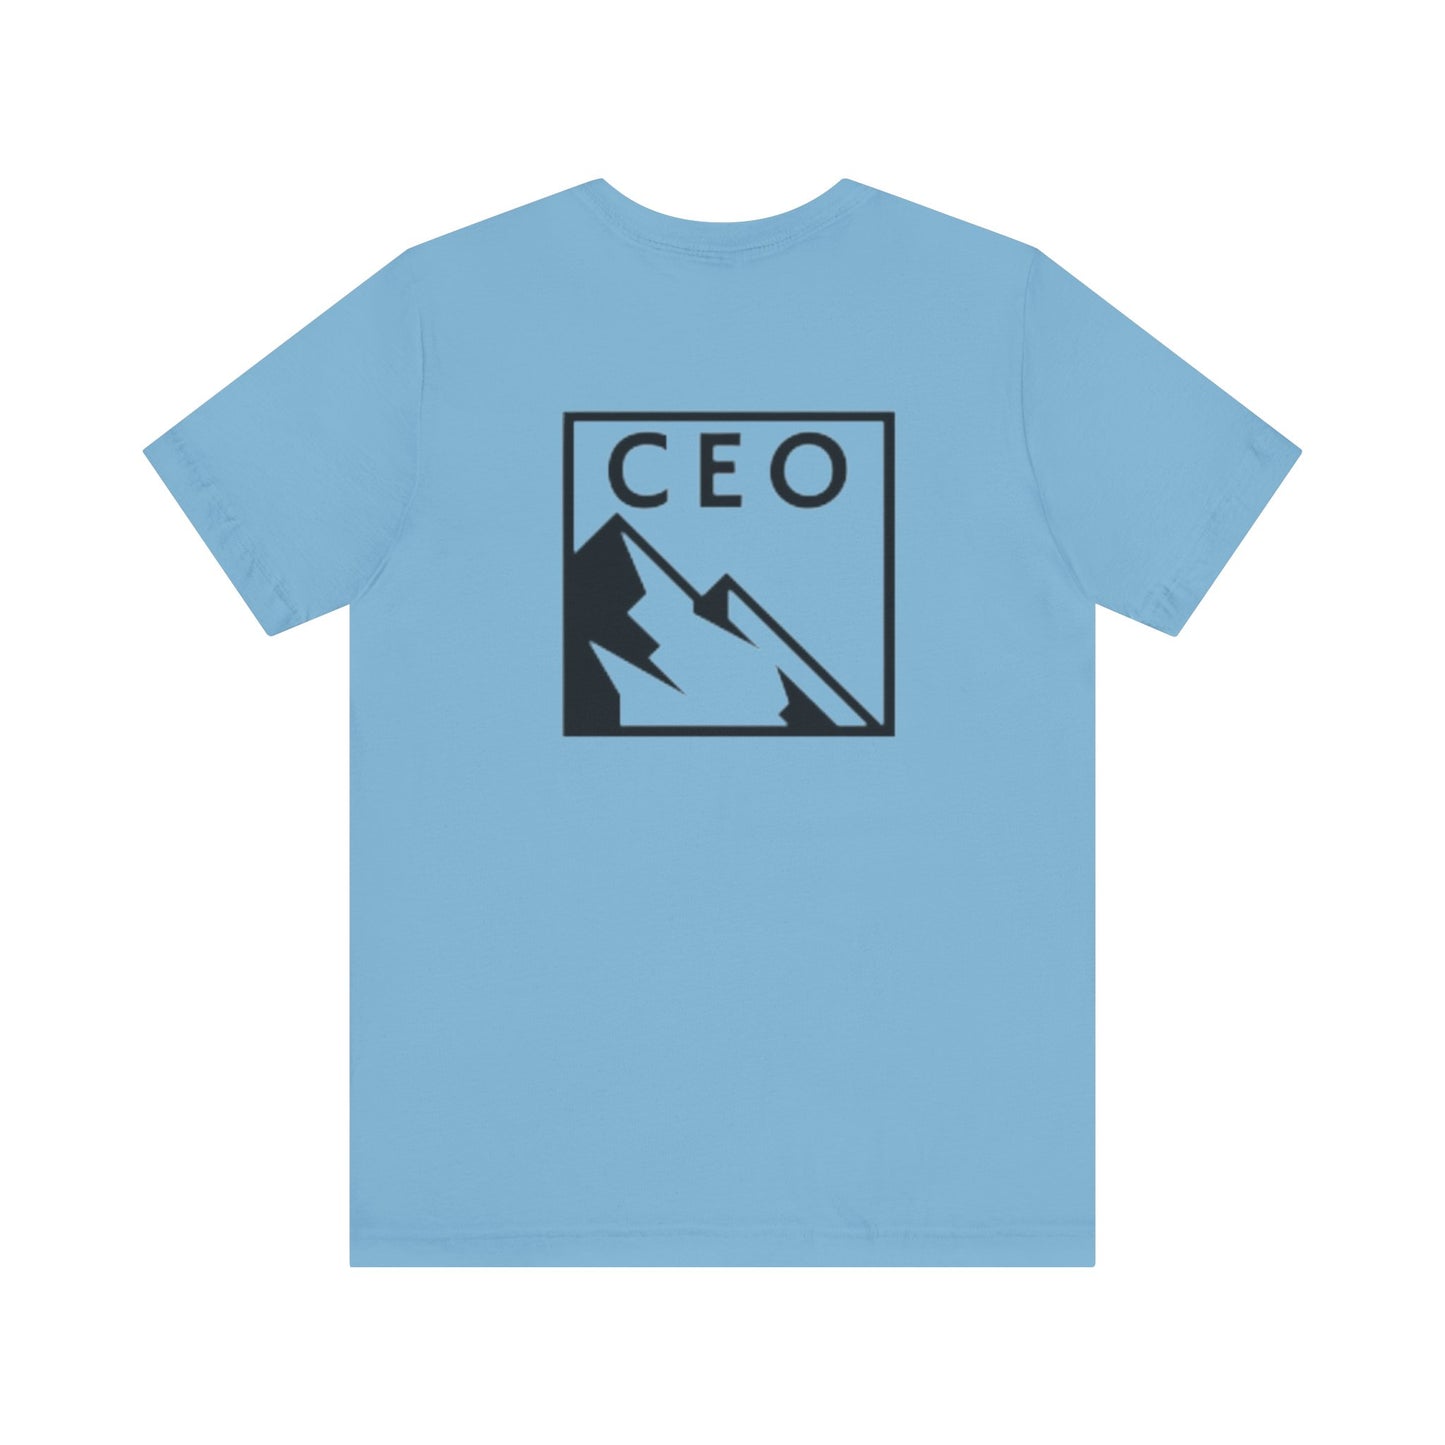 New CEO T-shirts (Black print)